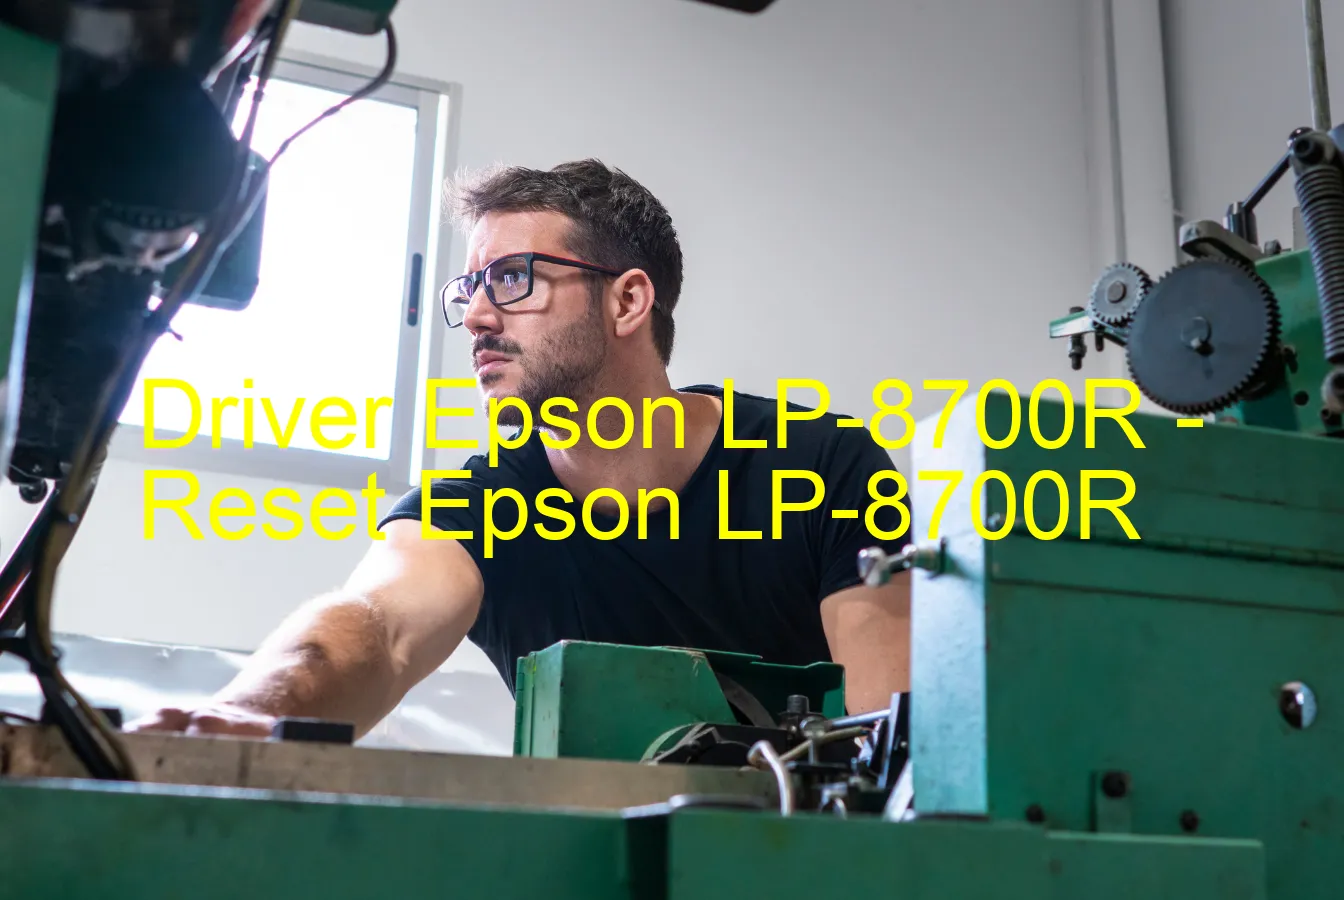 Epson LP-8700Rのドライバー、Epson LP-8700Rのリセットソフトウェア